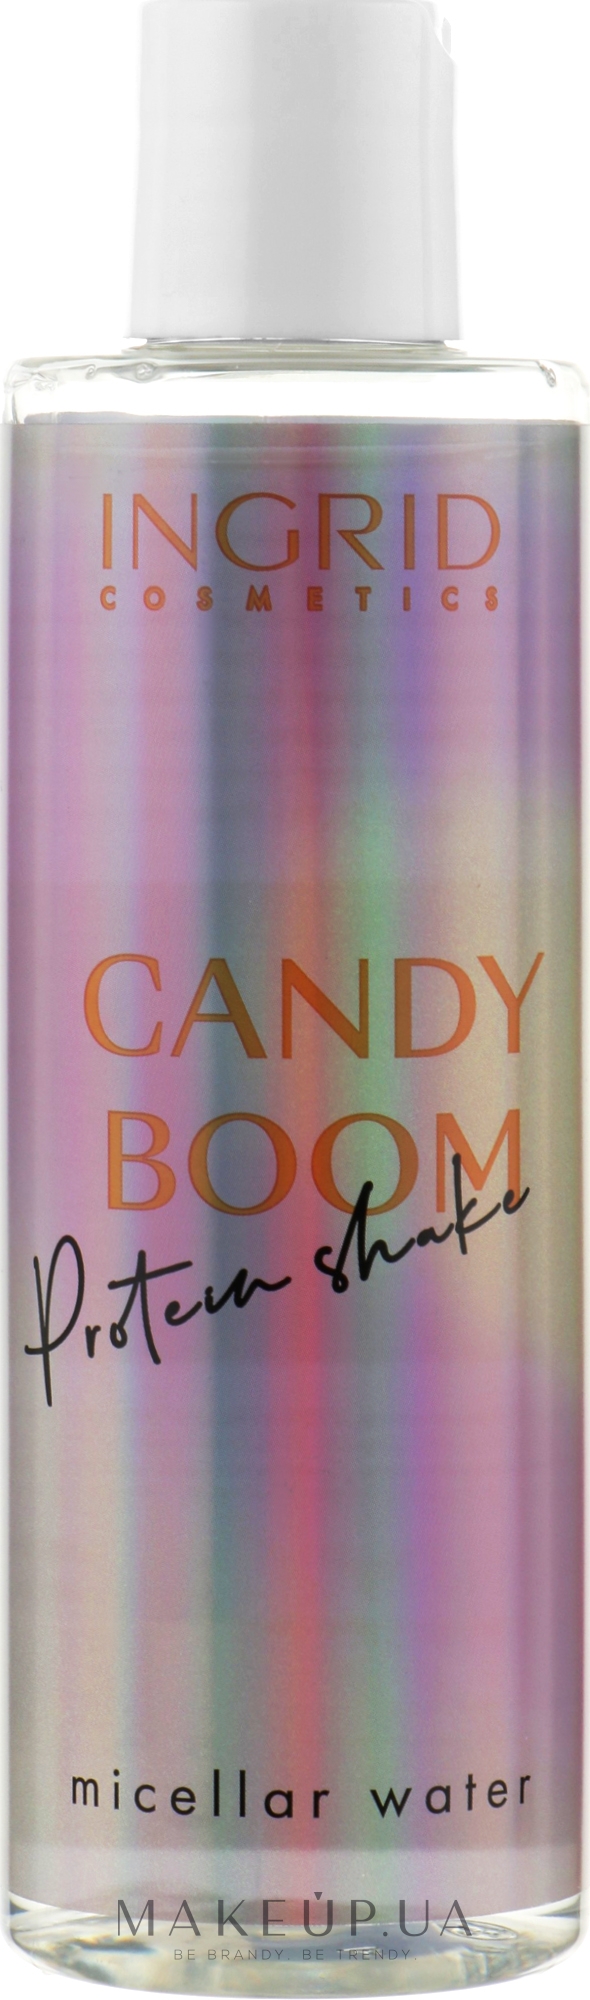 Міцелярна вода - Ingrid Cosmetics Candy Boom Micellar Water — фото 200ml